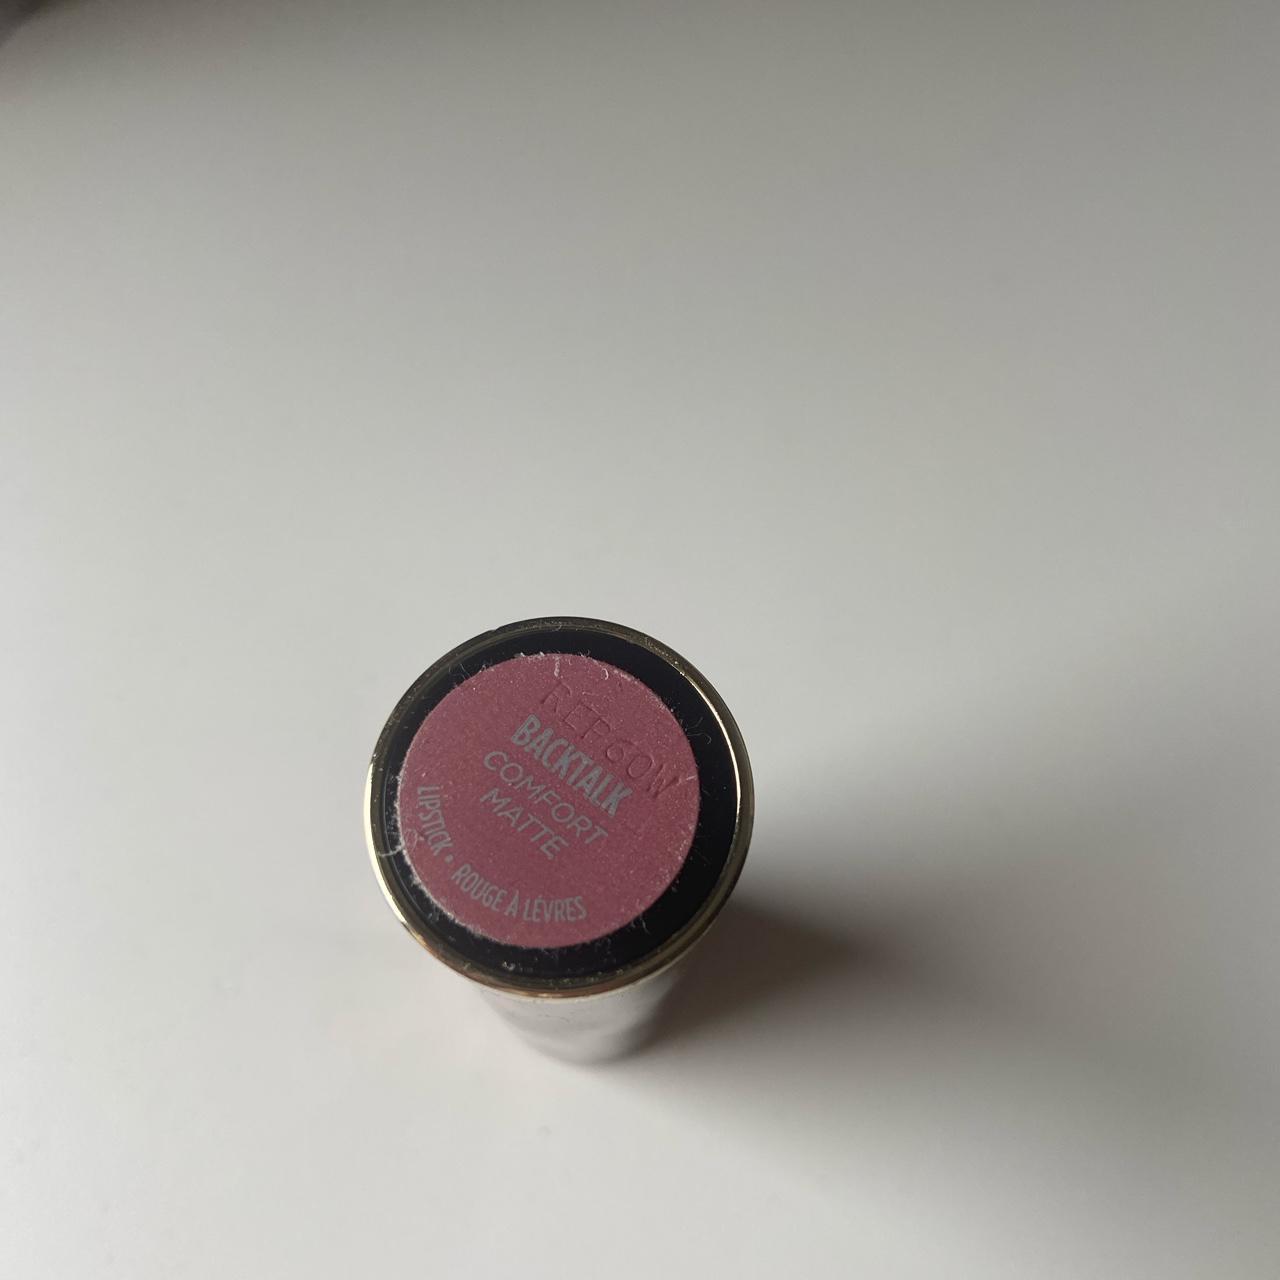 Product Image 3 - Urban decay comfort matte lipstick